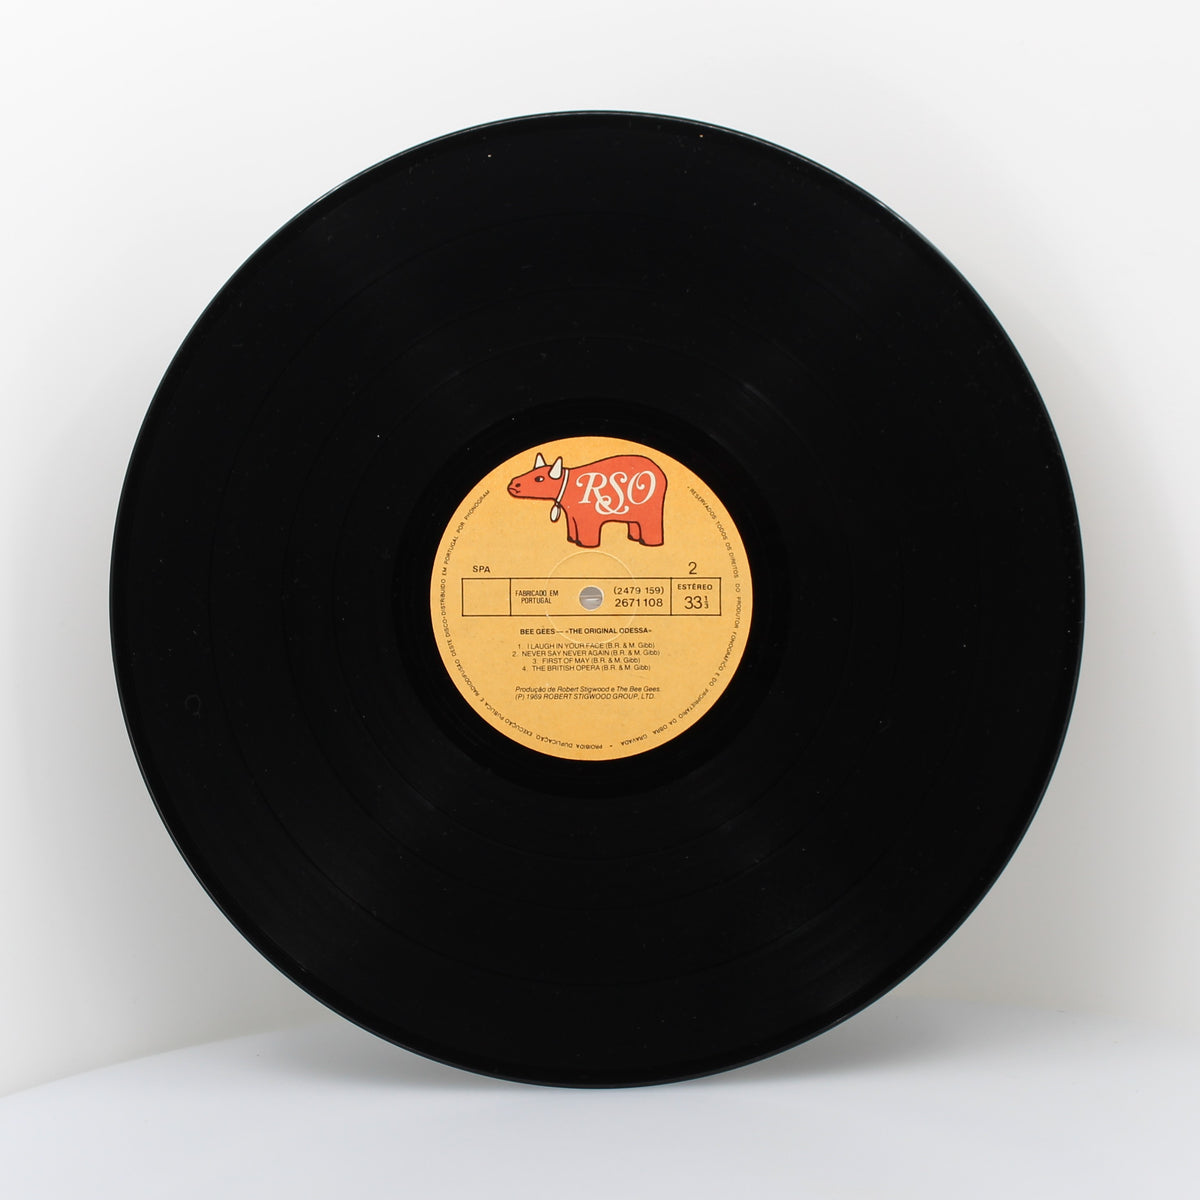 Bee Gees - Odessa, Vinyl LP 33Rpm, Portugal